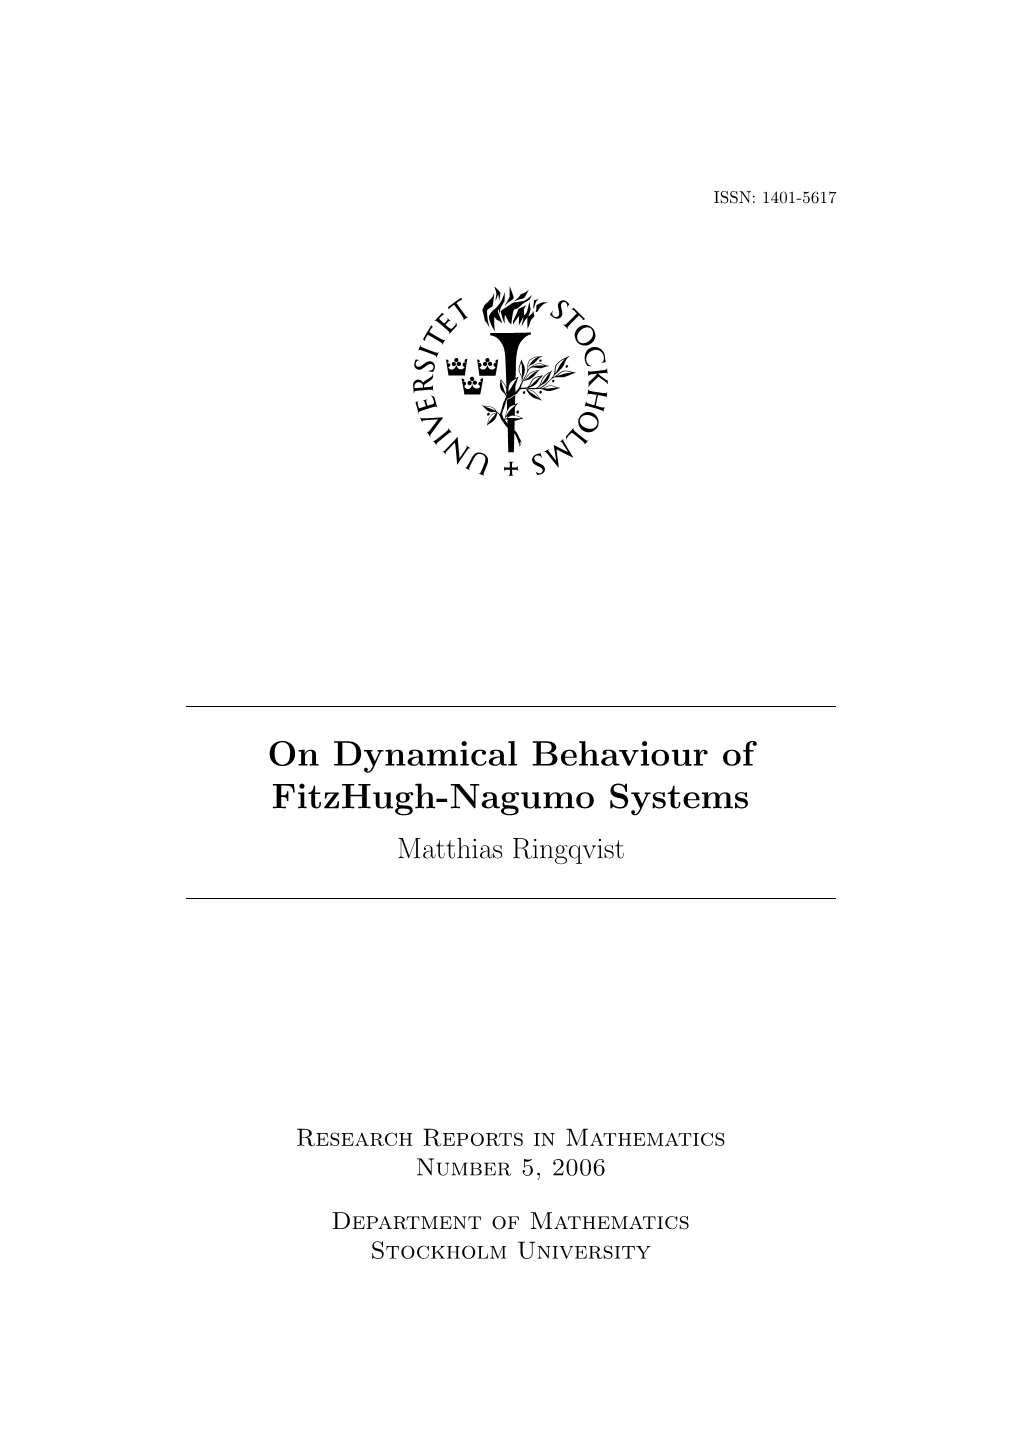 On Dynamical Behaviour of Fitzhugh-Nagumo Systems Matthias Ringqvist